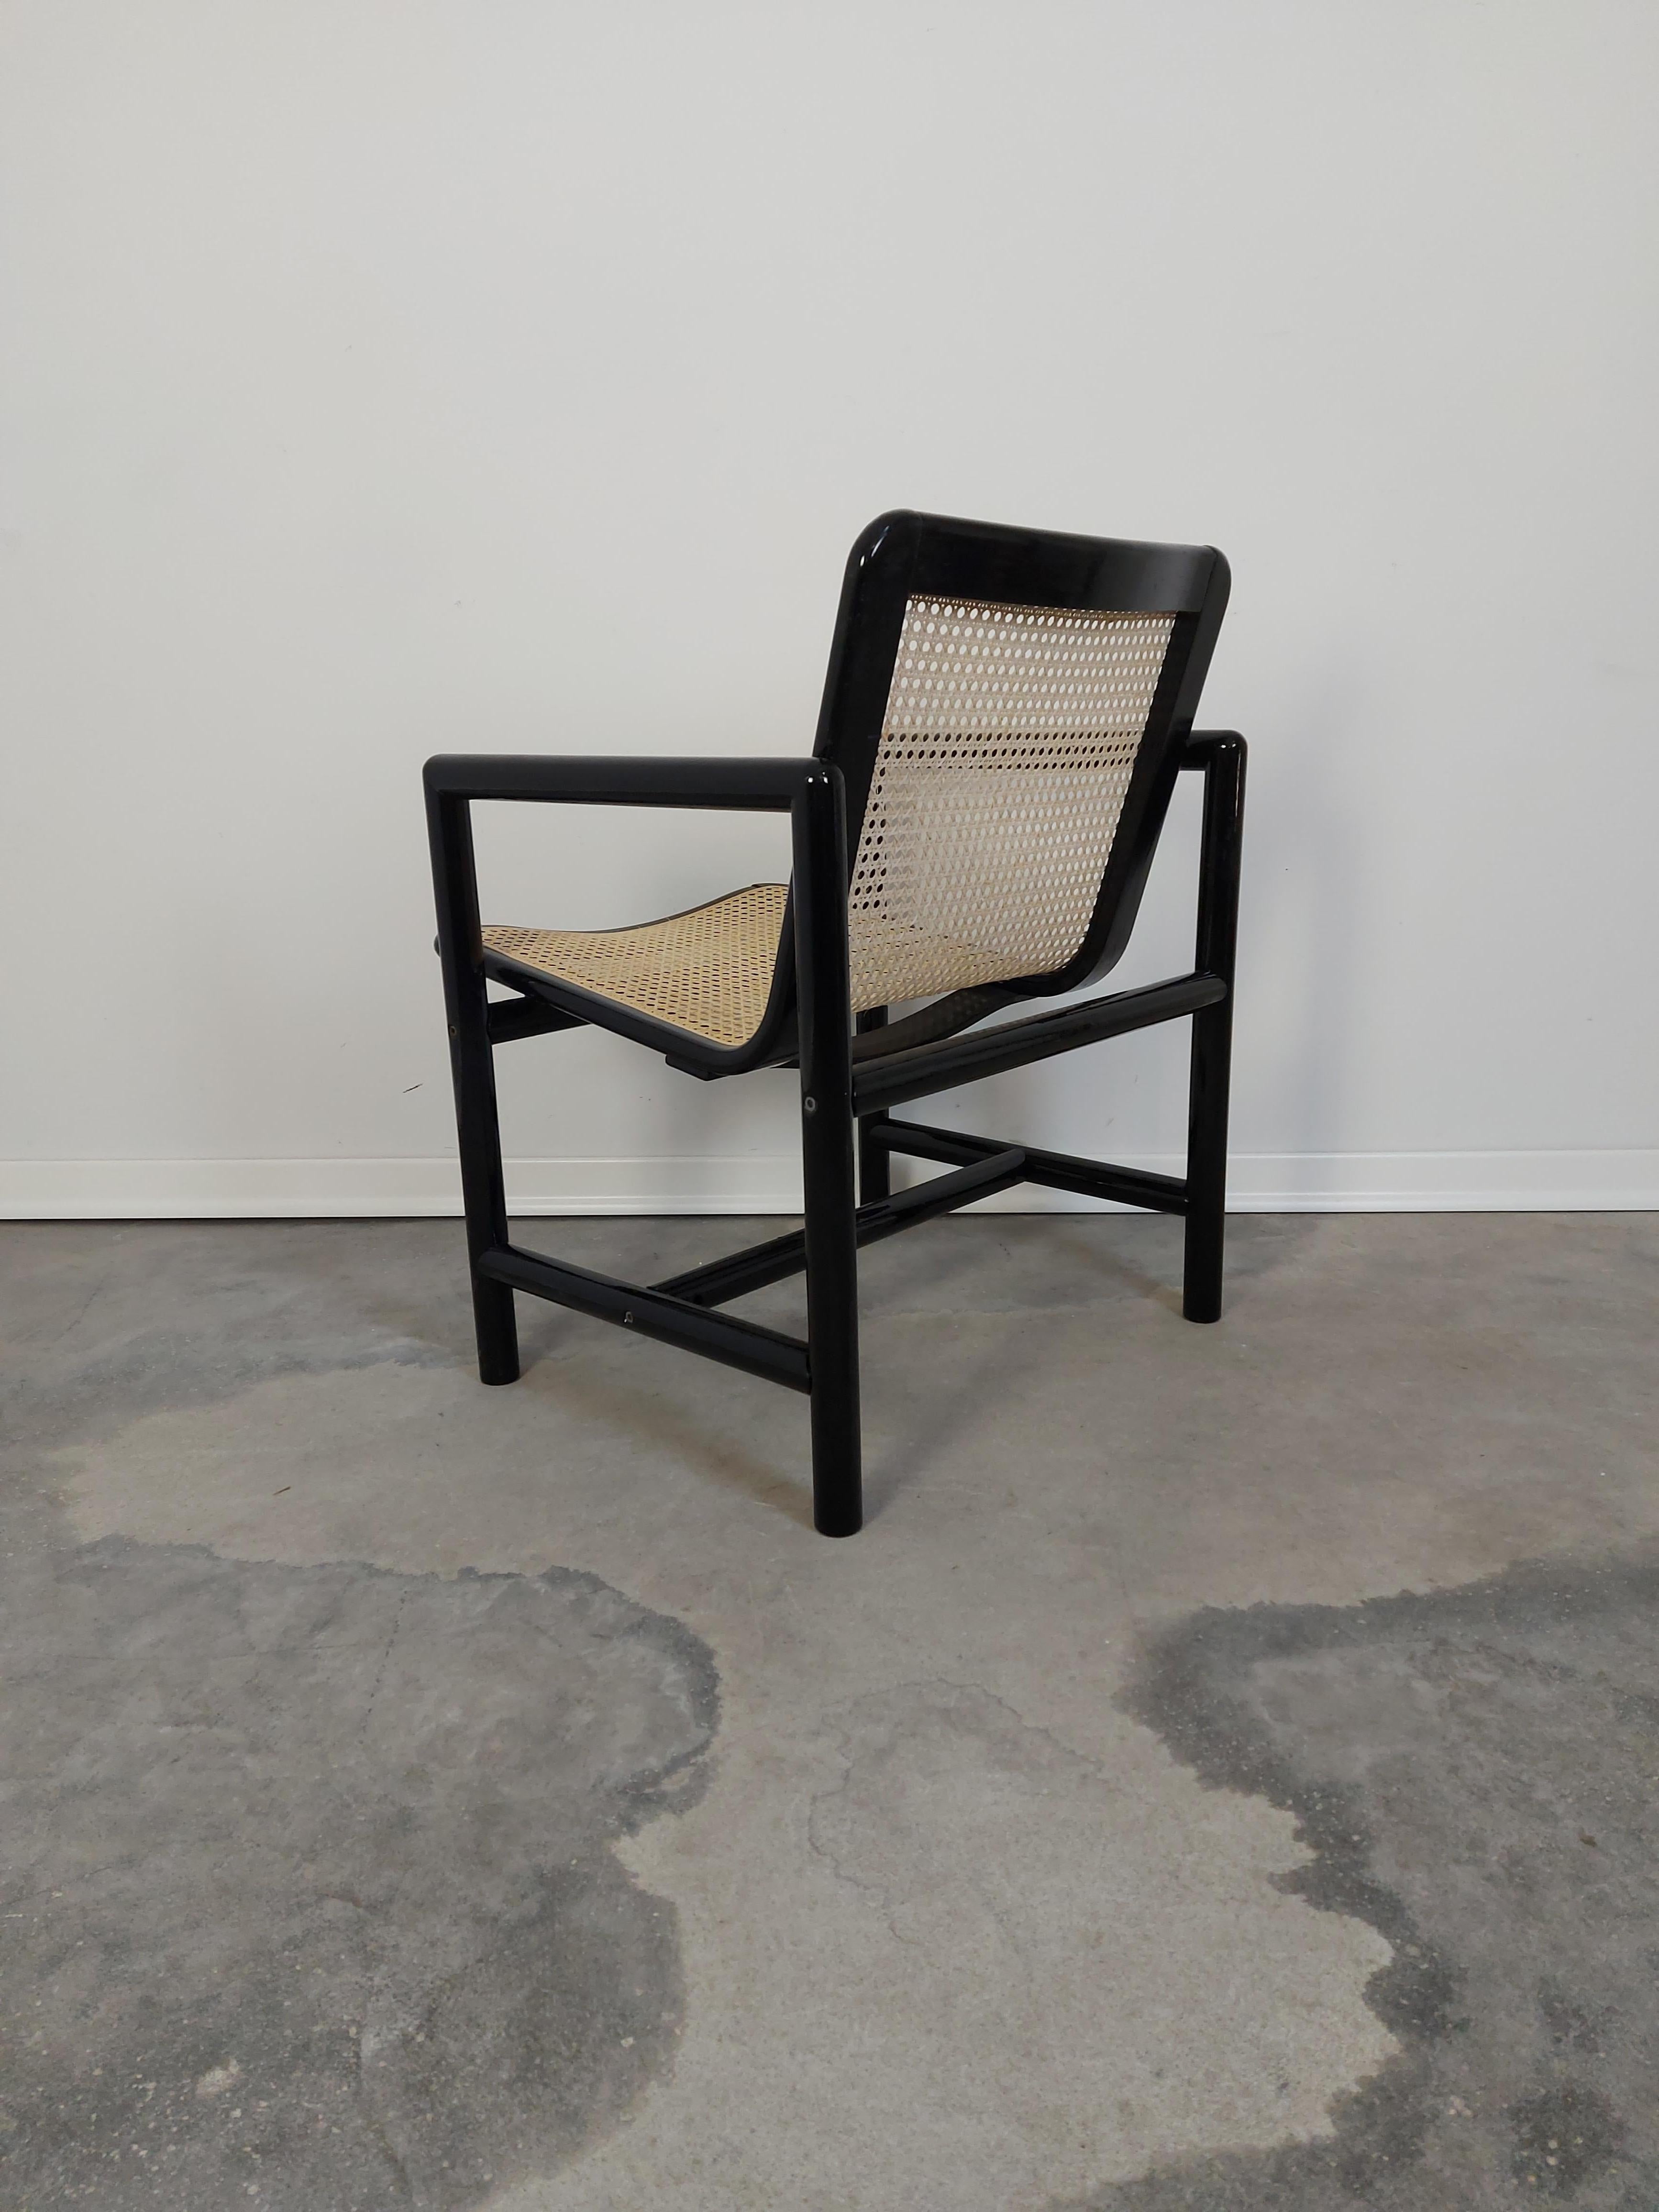 Cane Chair by Branko Ursic for Stol Kamnik